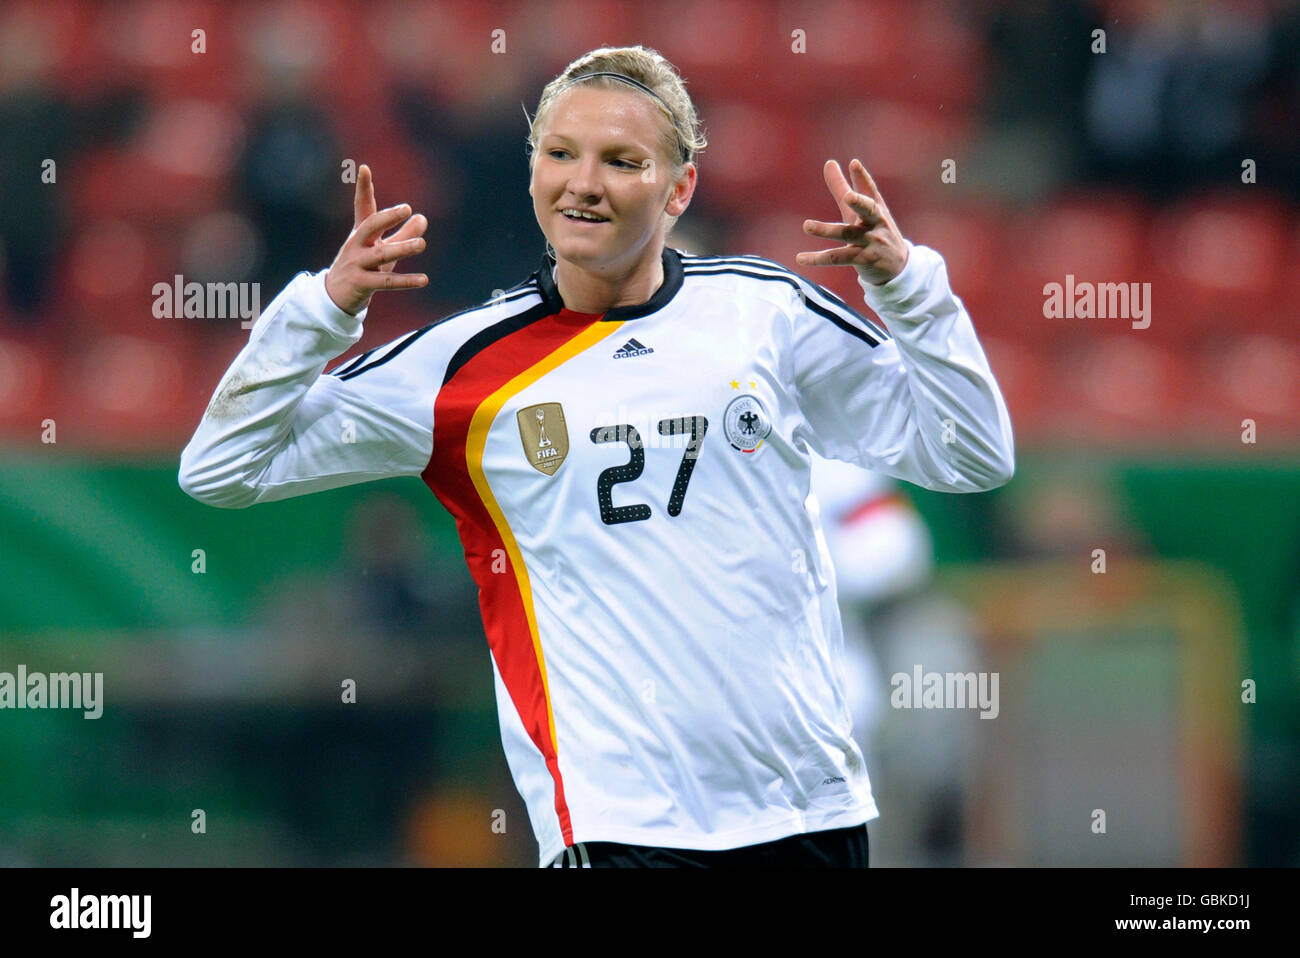 Alexander Popp celebrating a goal, women's international football match, Germany - Nigeria 8:0, BayArena, Leverkusen Stock Photo